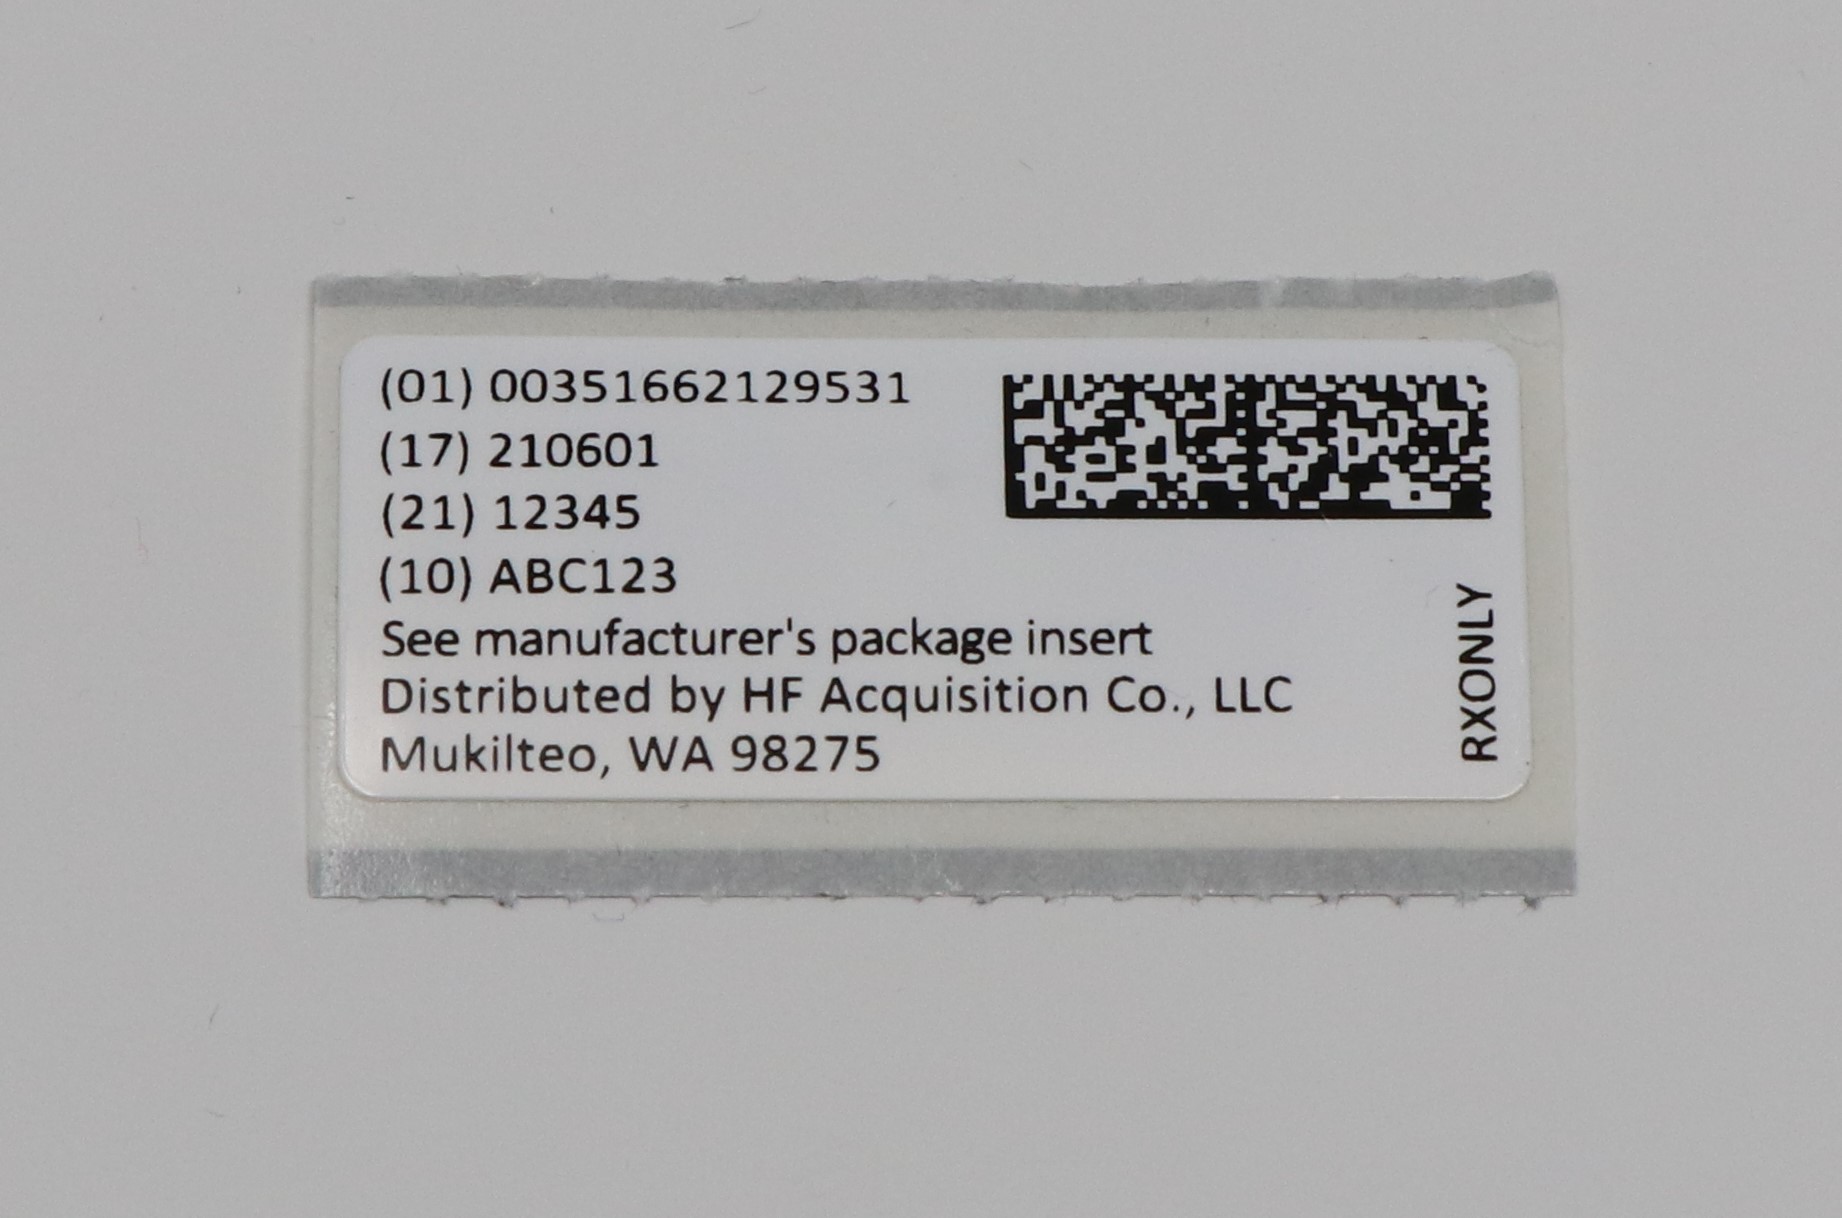 Serialized RFID Case Label